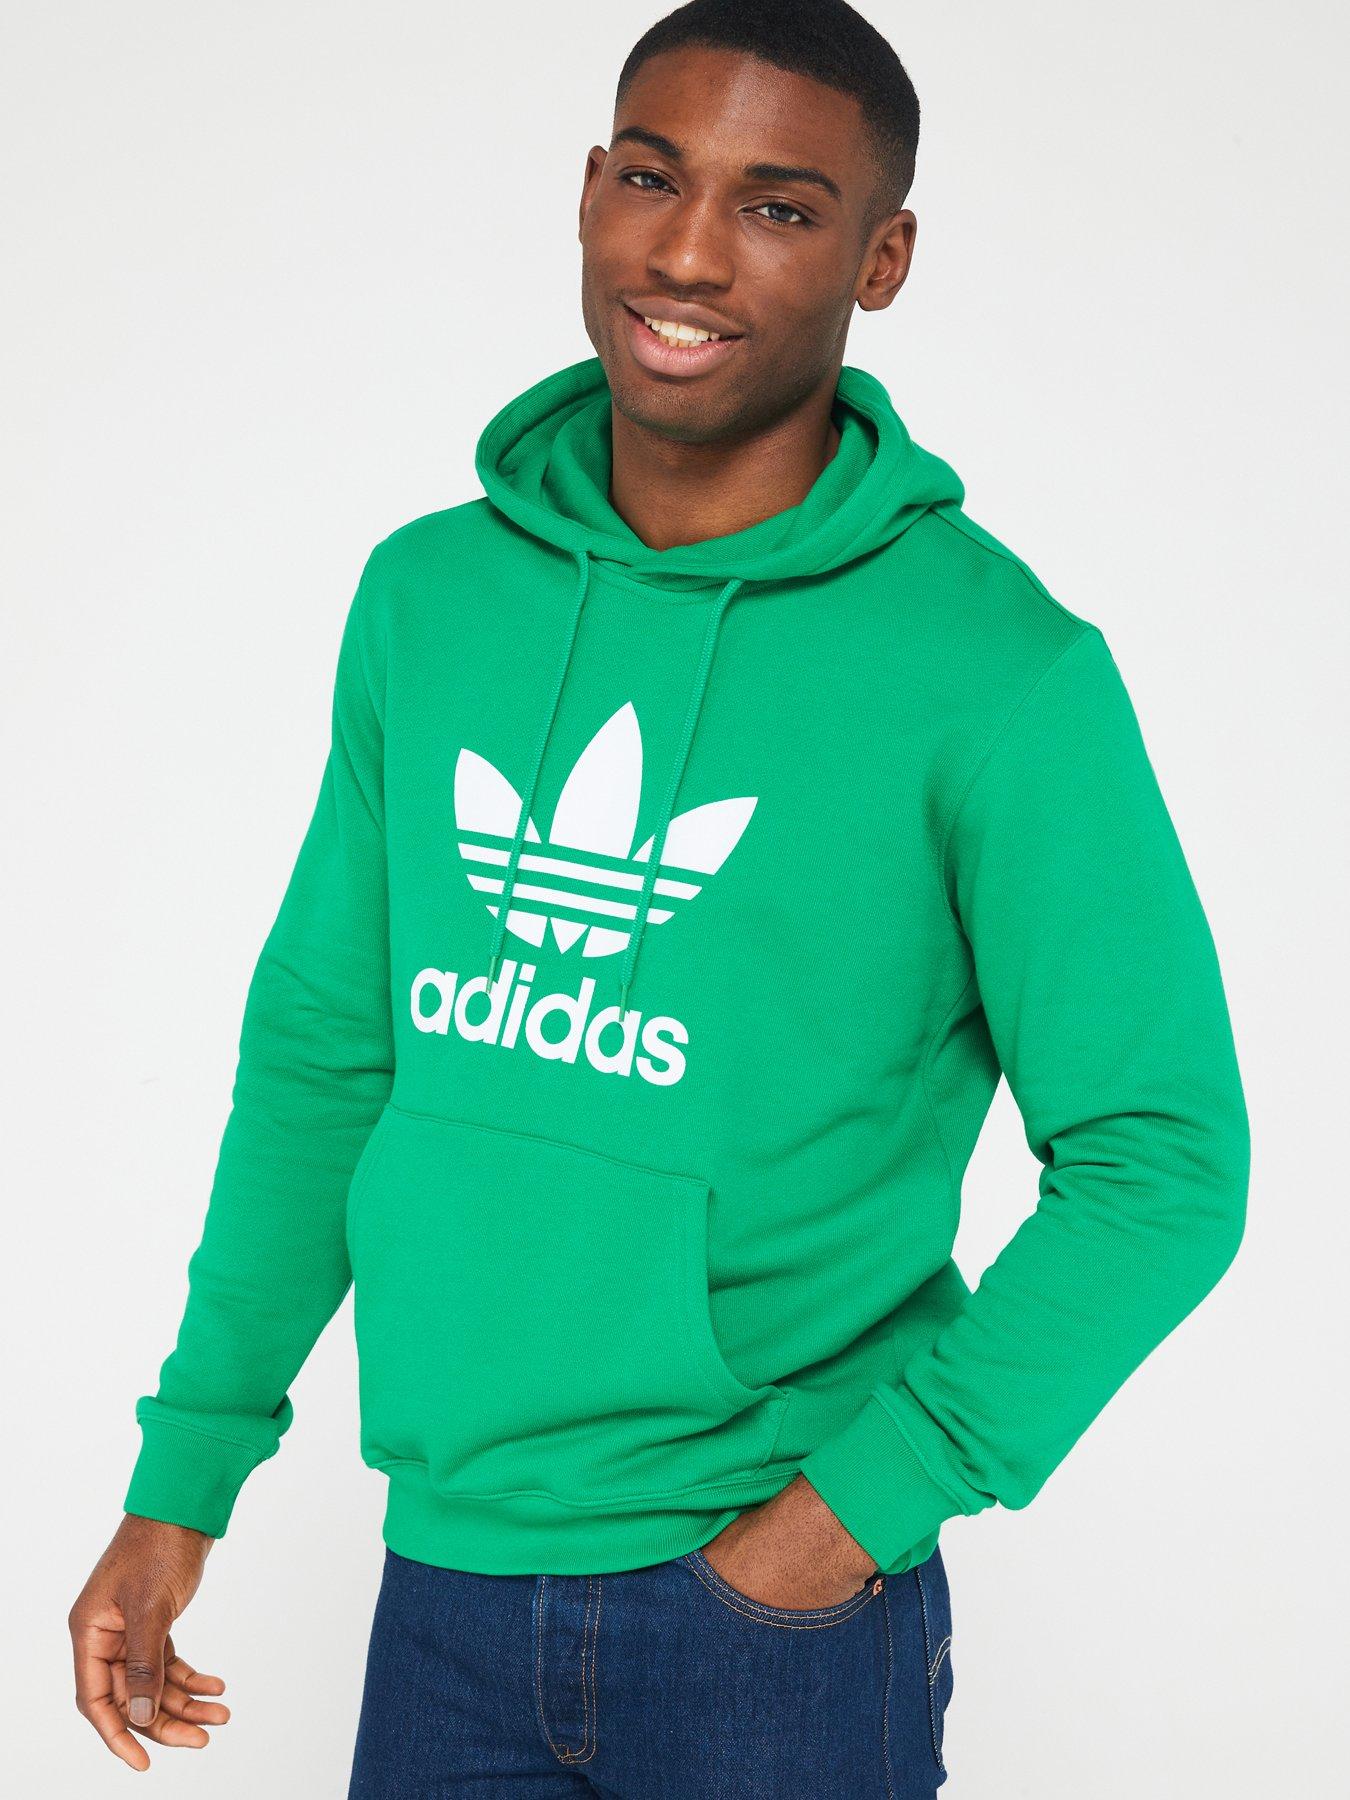 Ireland & | | Very Hoodies Men | Adidas originals sweatshirts